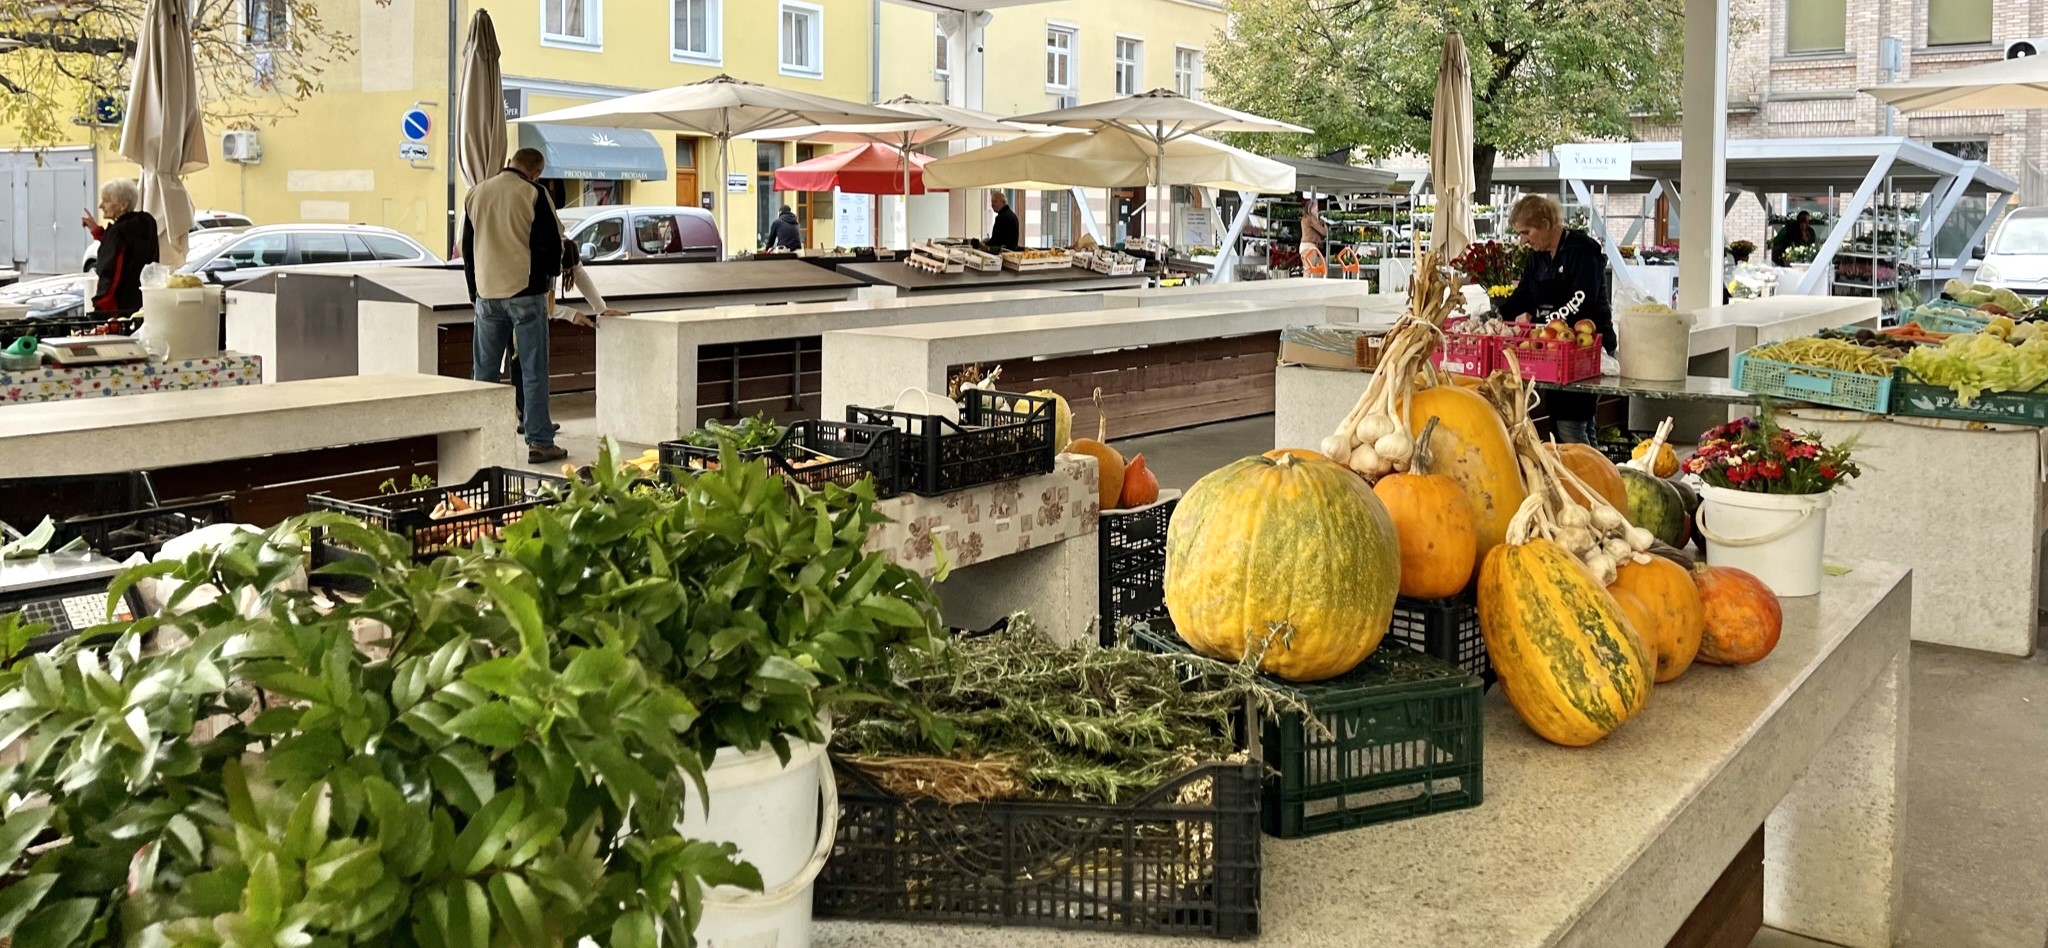 A market in Celje, Slovenia